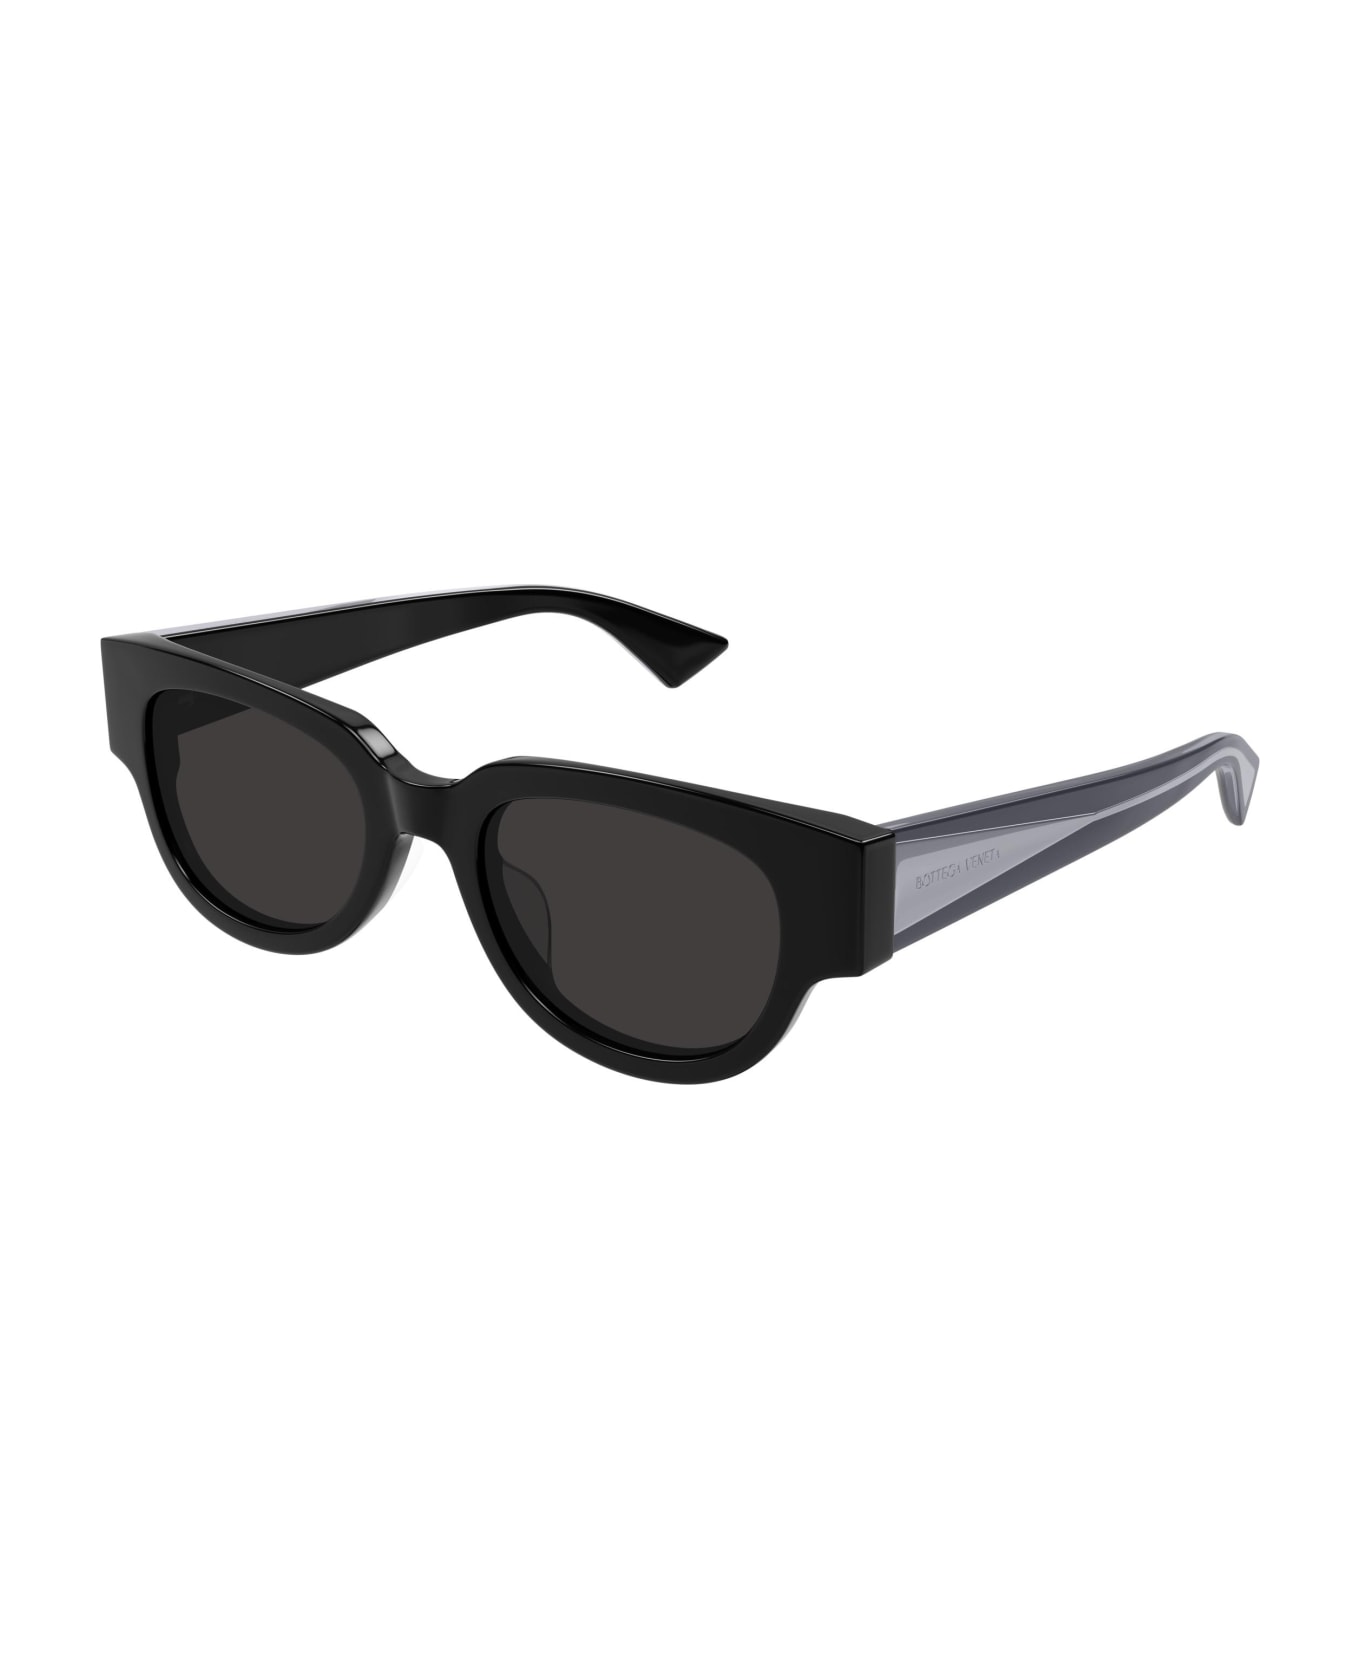 Bottega Veneta Eyewear Sunglasses - Nero/Grigio サングラス